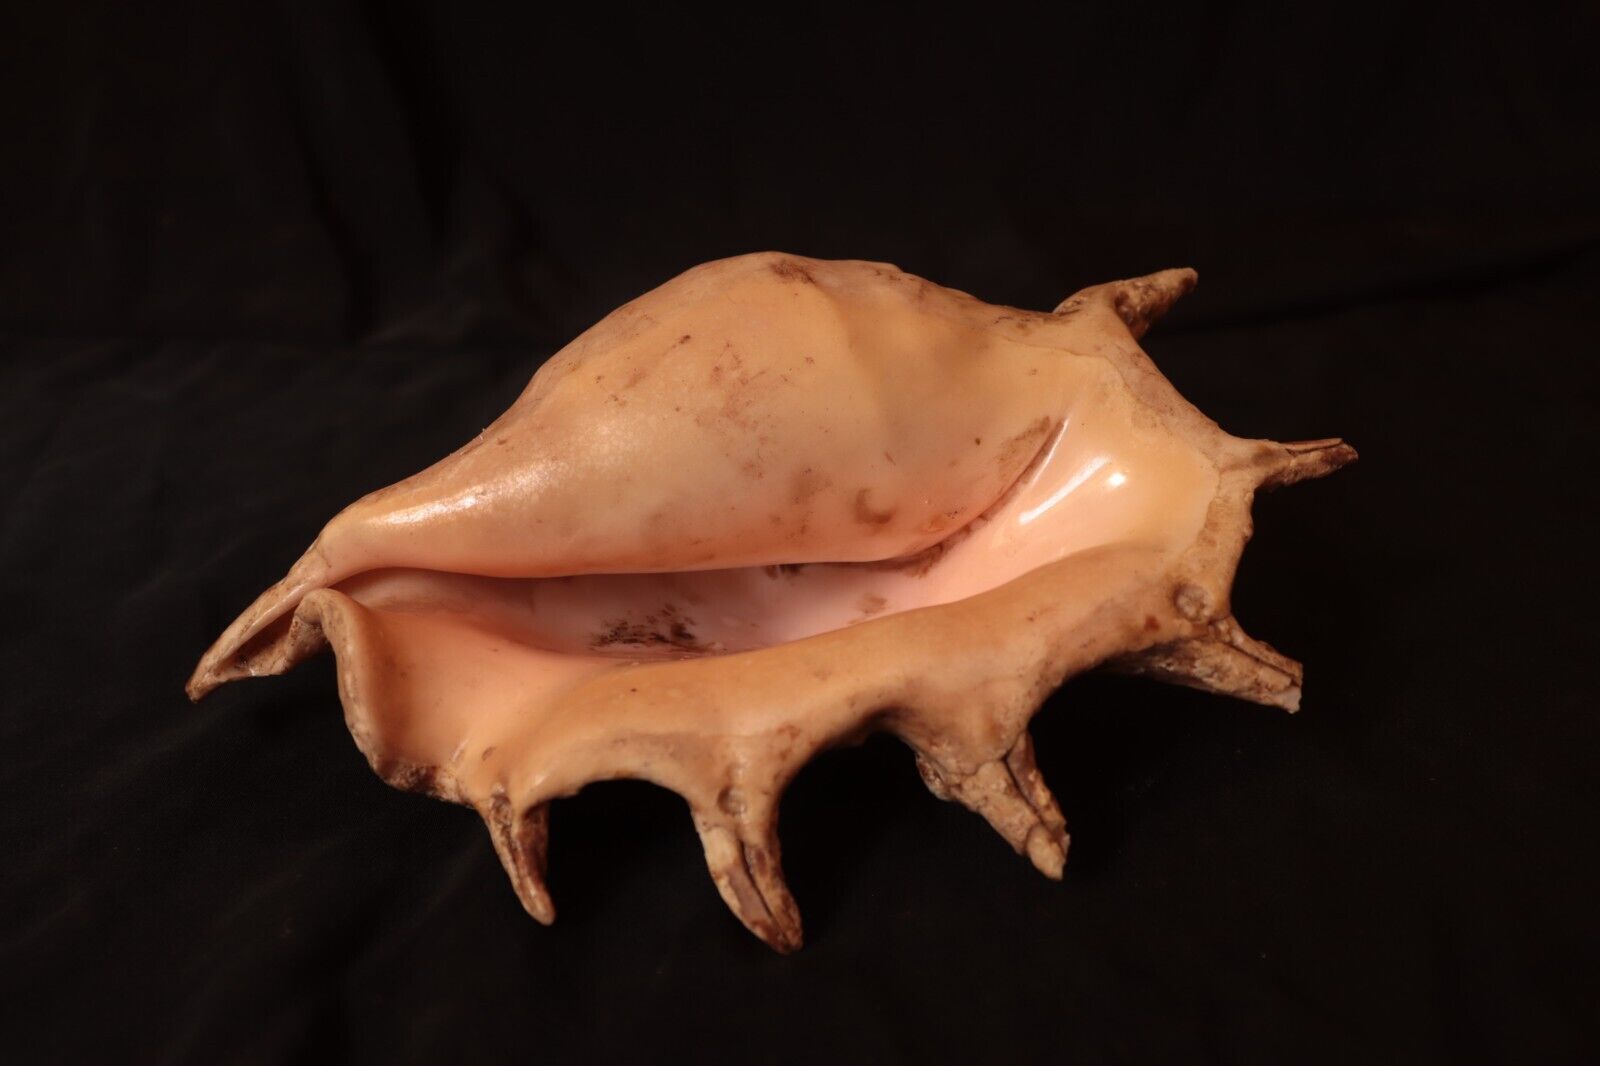 Vintage Big Seashell Spider Conch Lambis Truncata, Beautiful Seashell For Decor